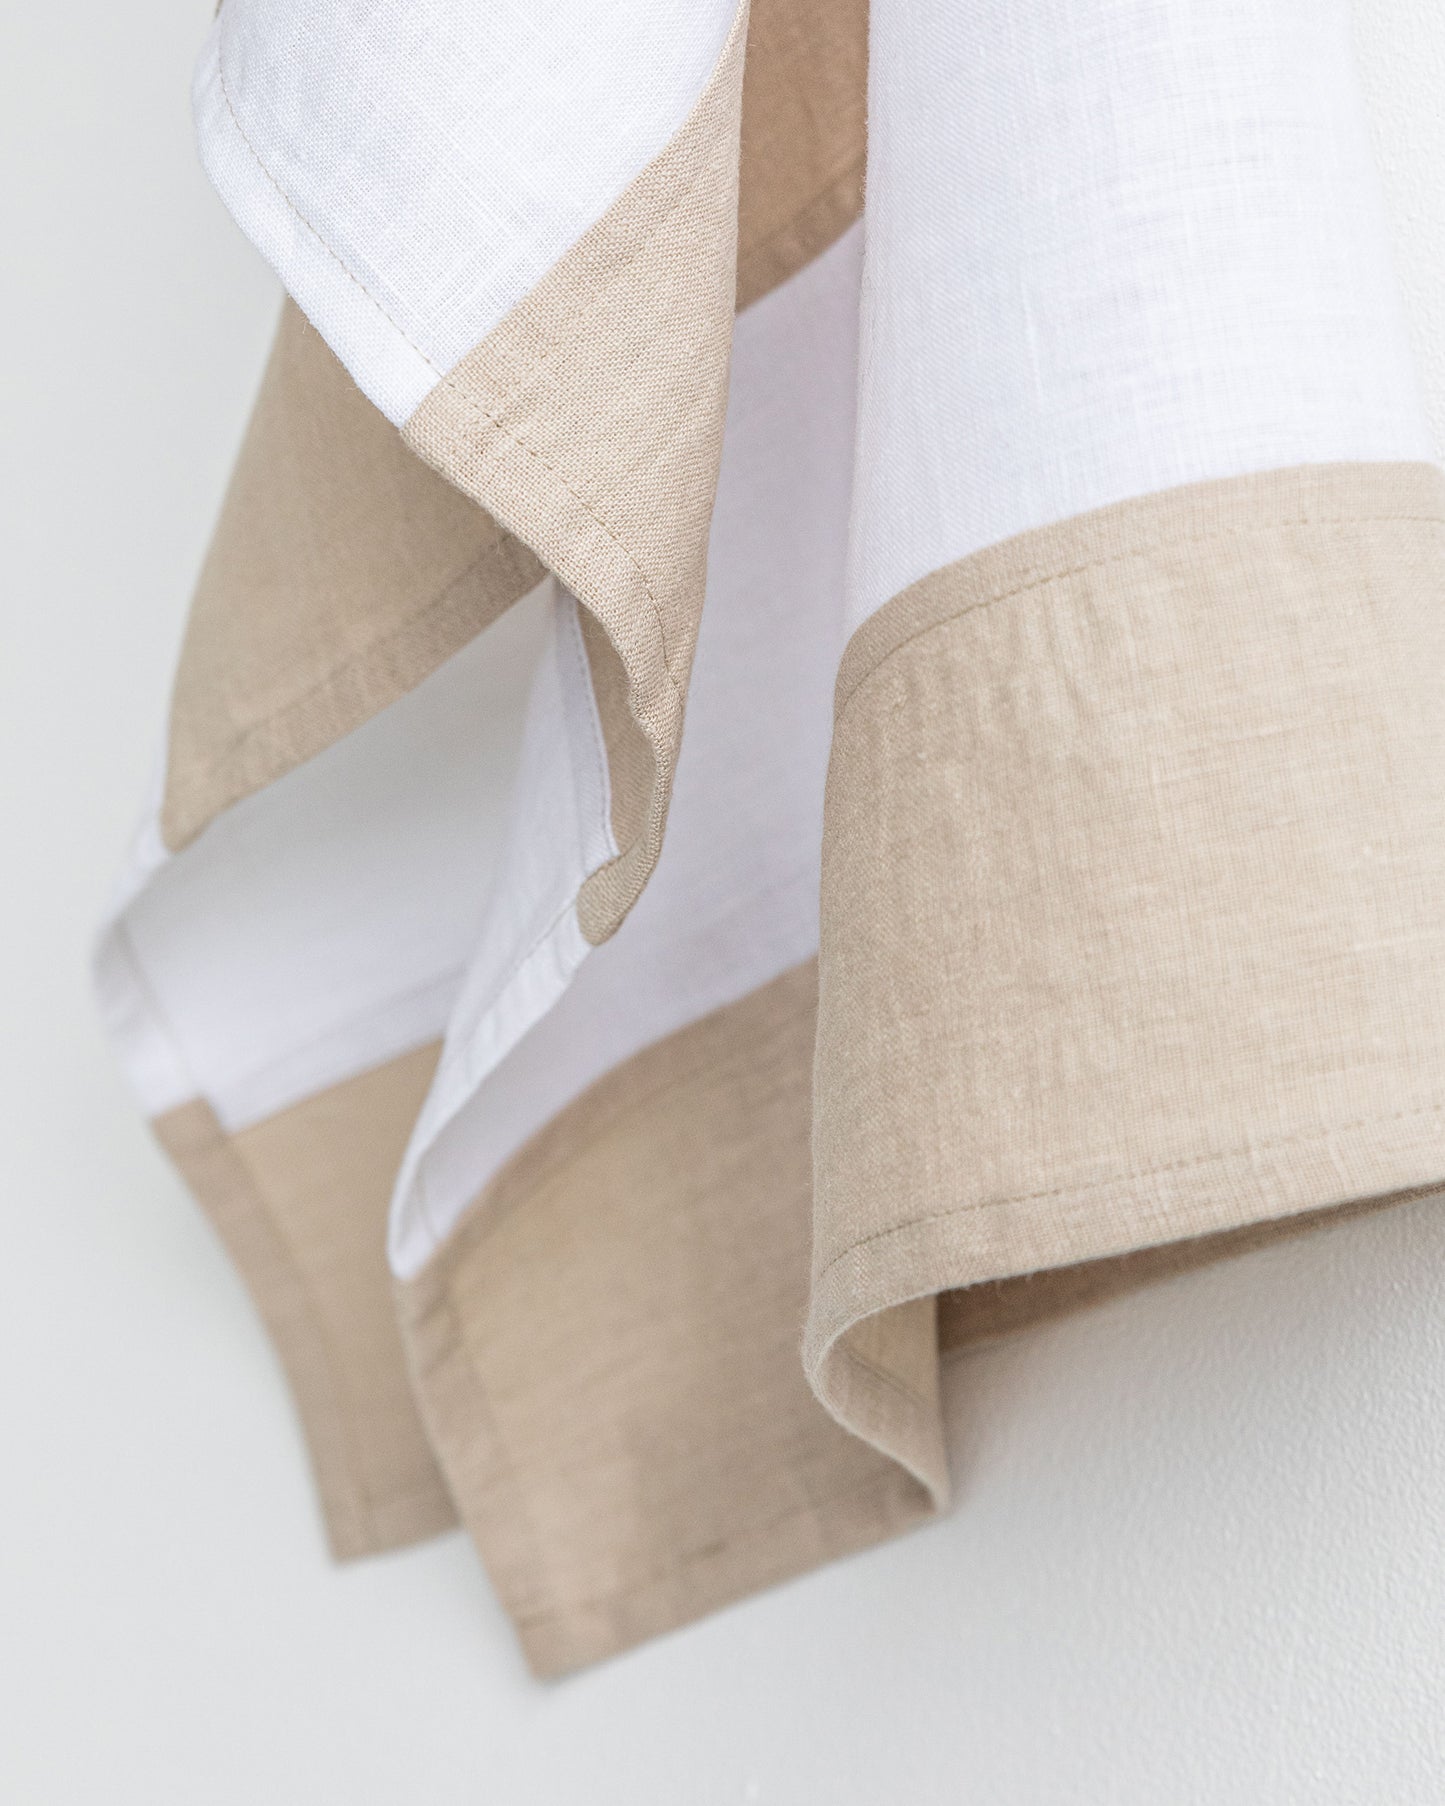 Zero-waste striped linen tea towel in Natural linen - MagicLinen